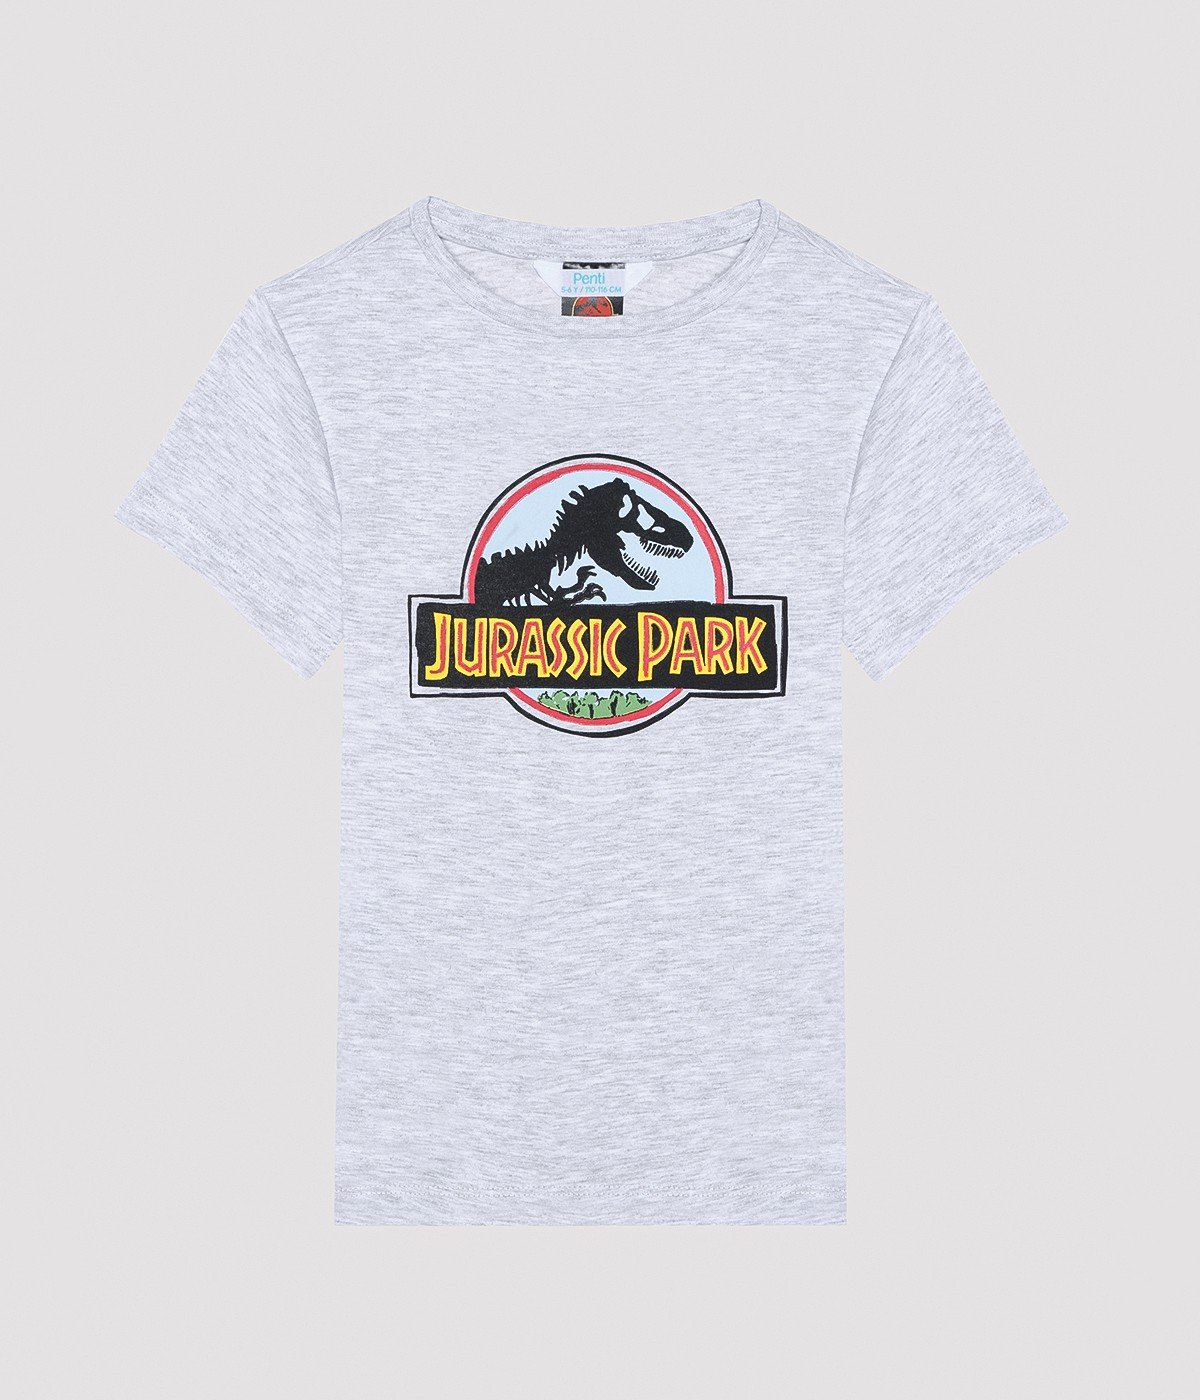 Set Pijama Unisex Jurassic Park